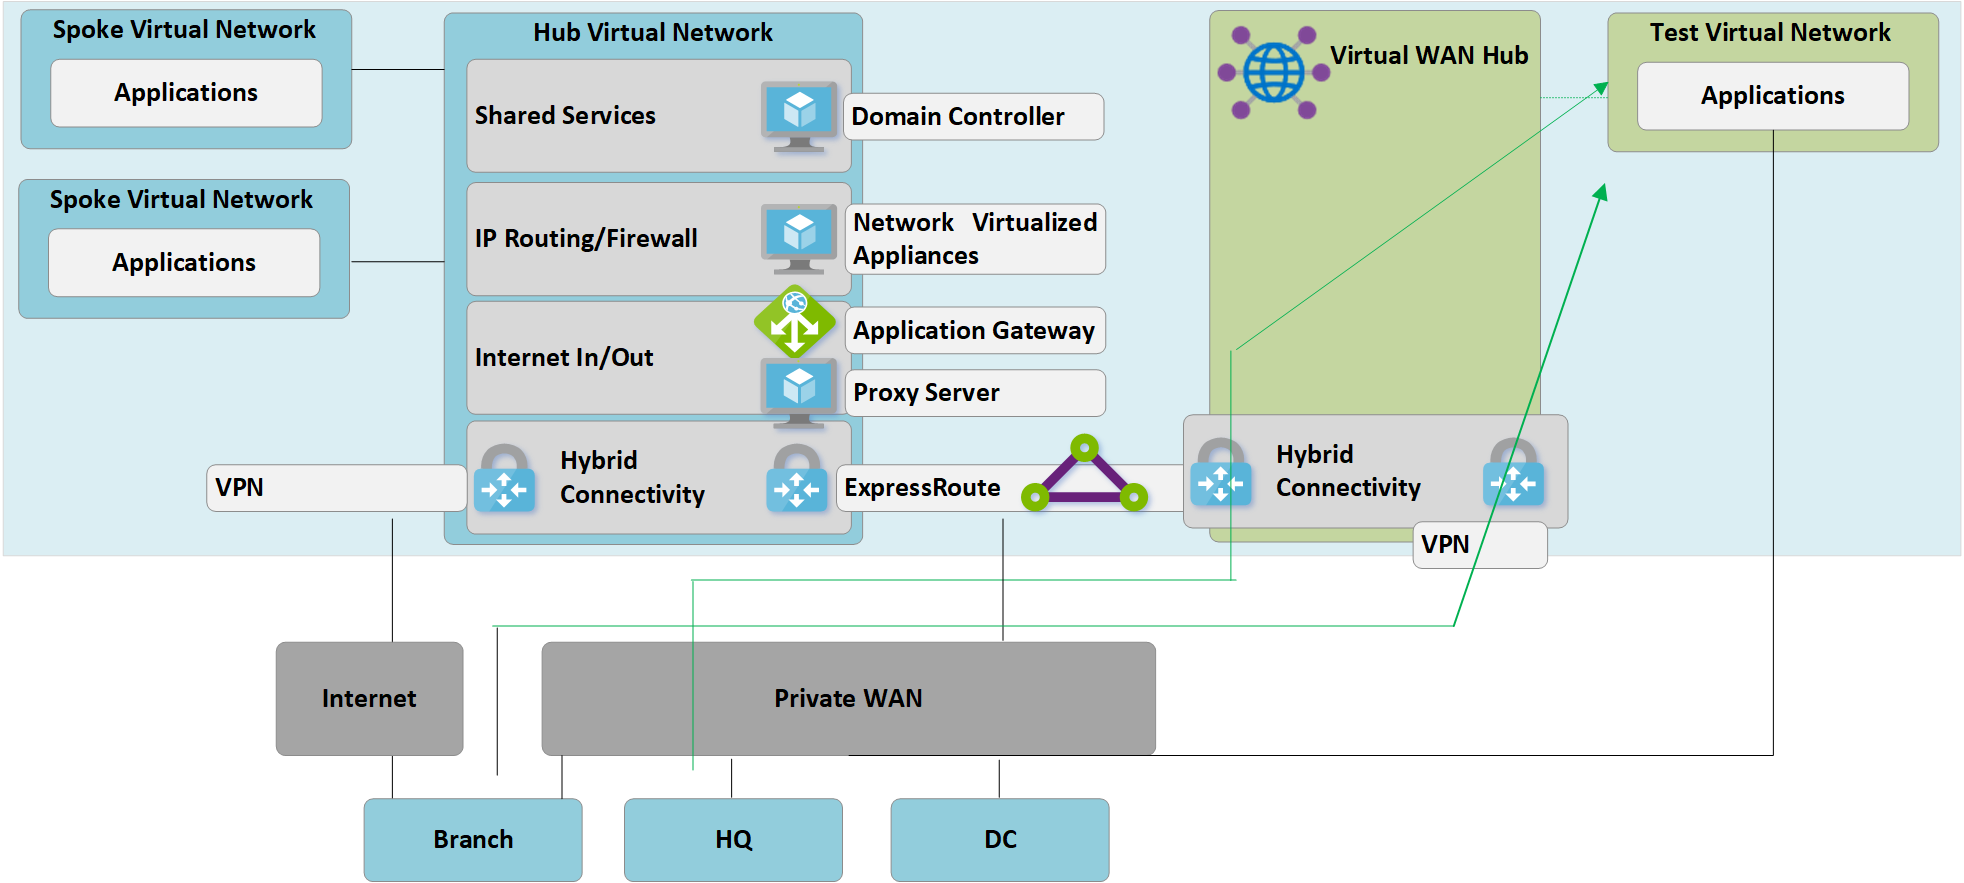 Hybride connectiviteit testen via Virtual WAN